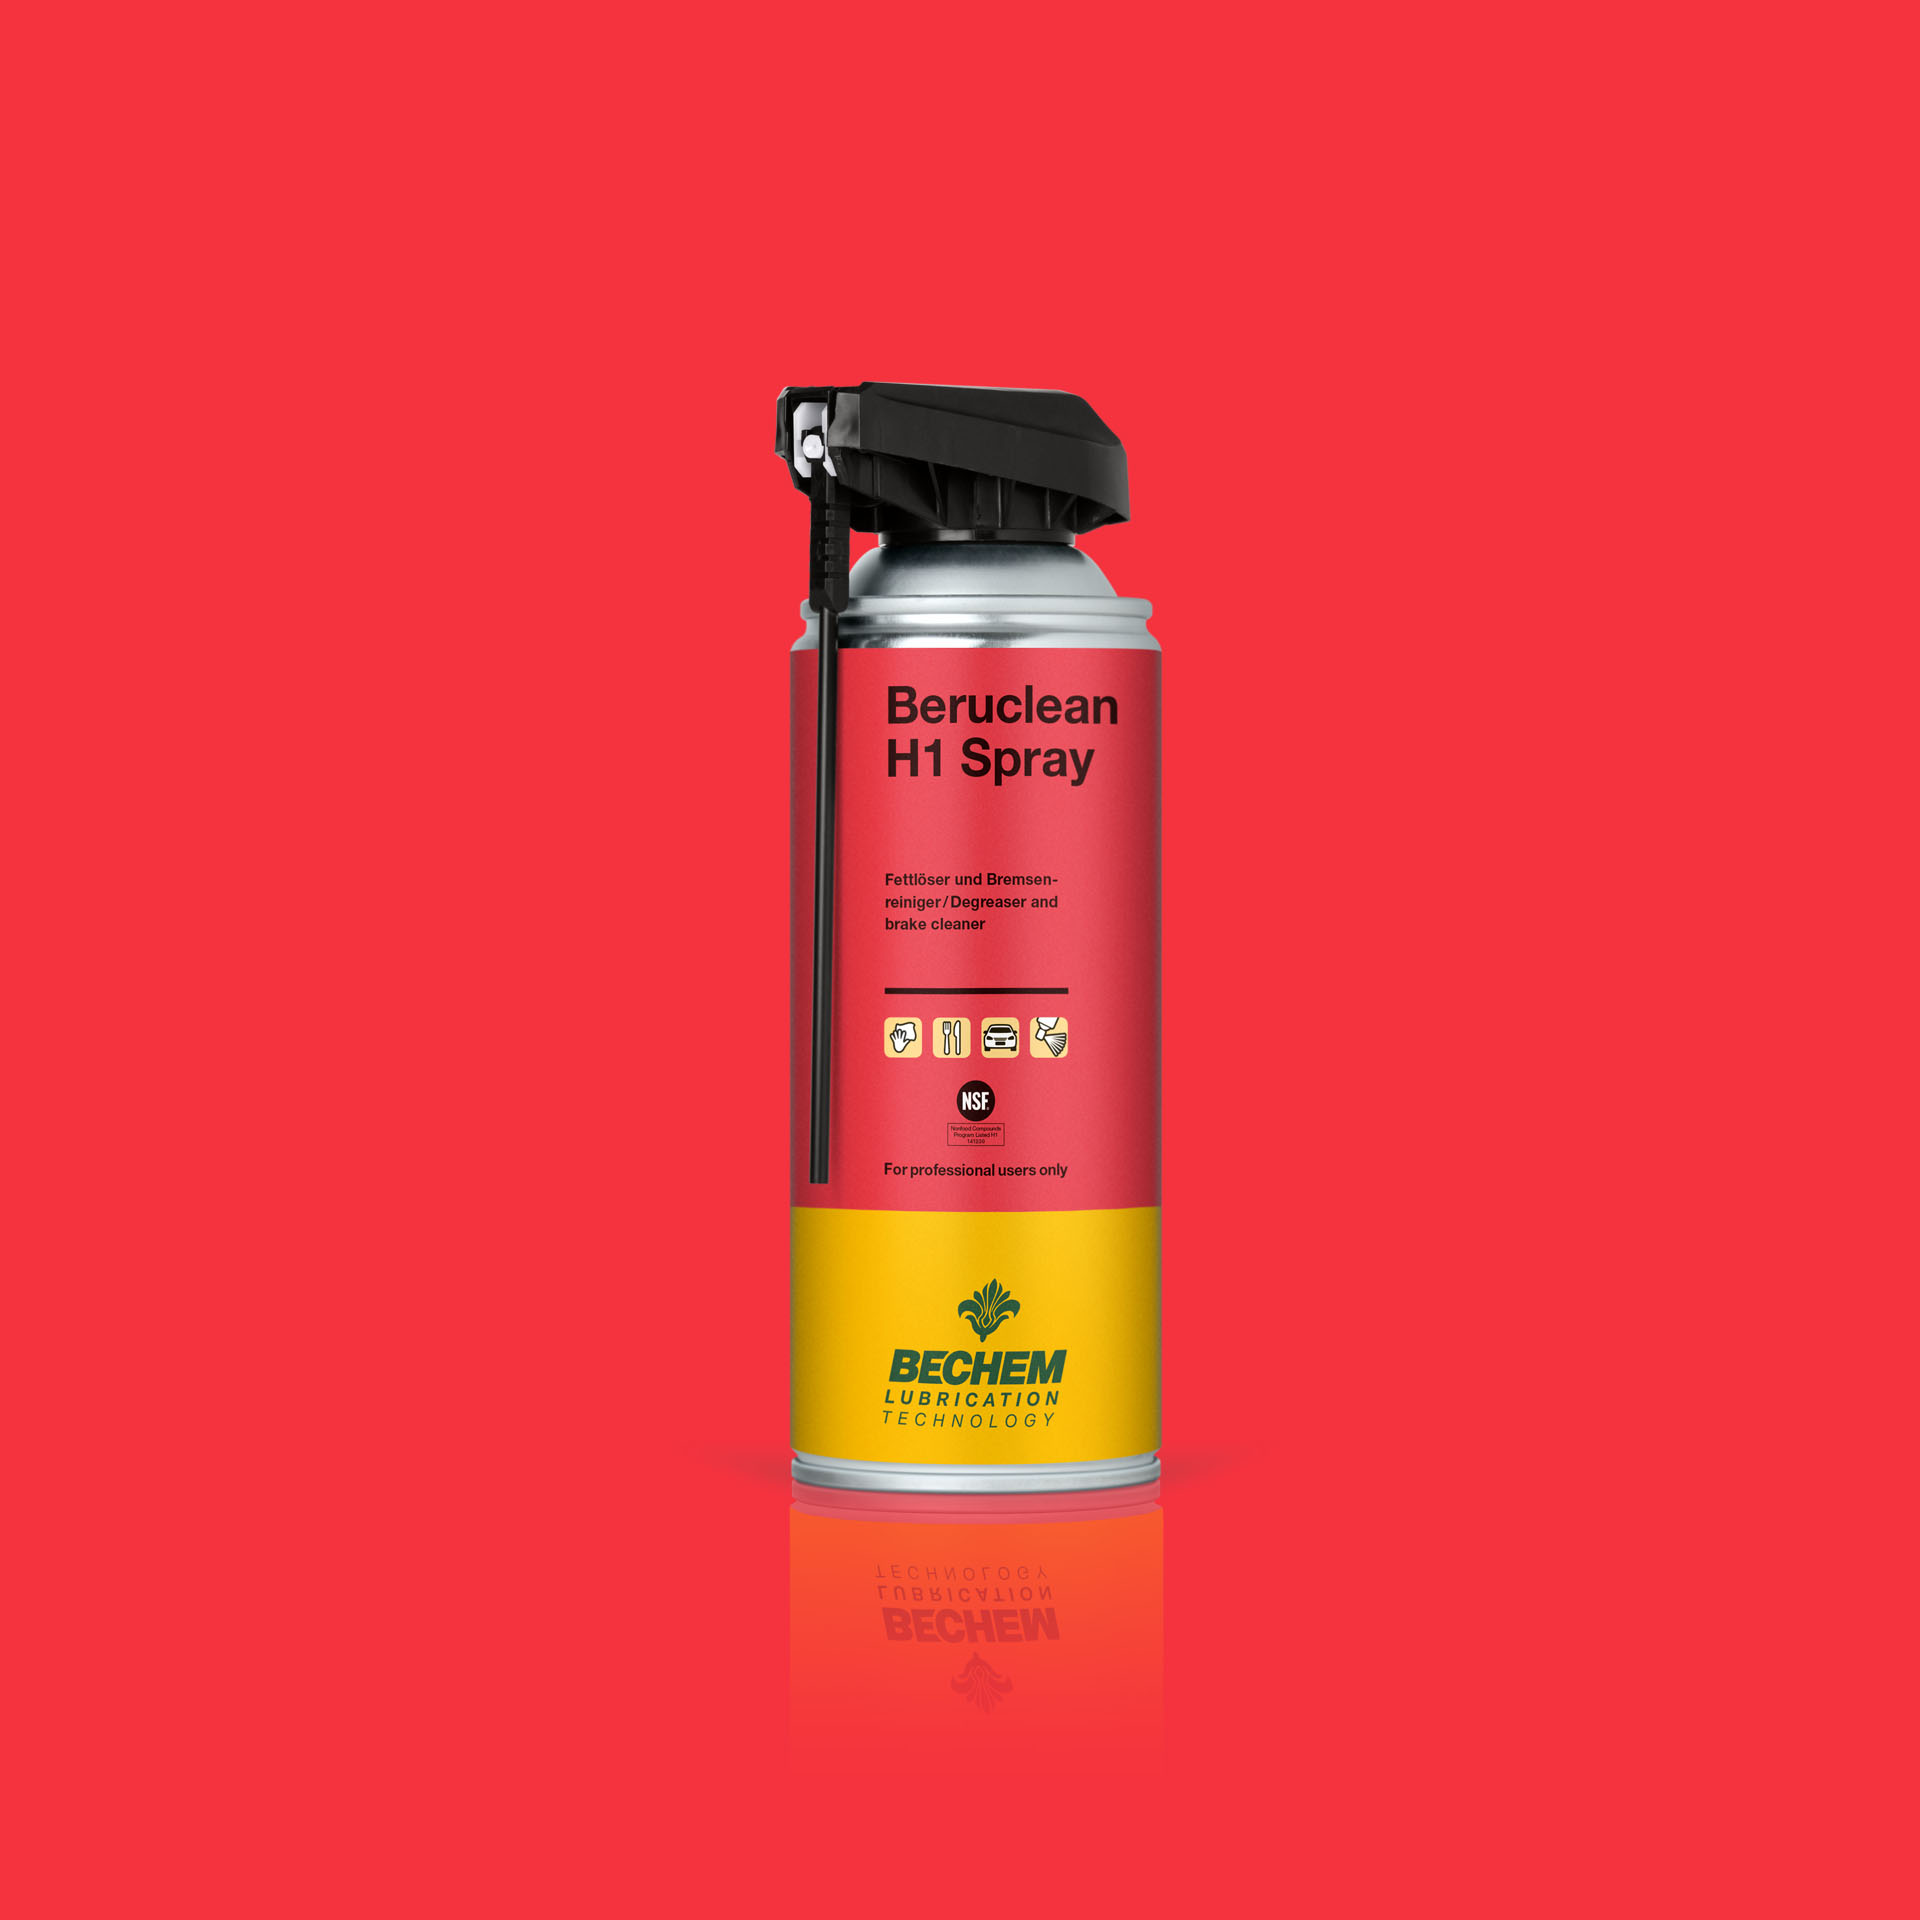 Beruclean H1 Spray - bombe aérosol de 400 ml